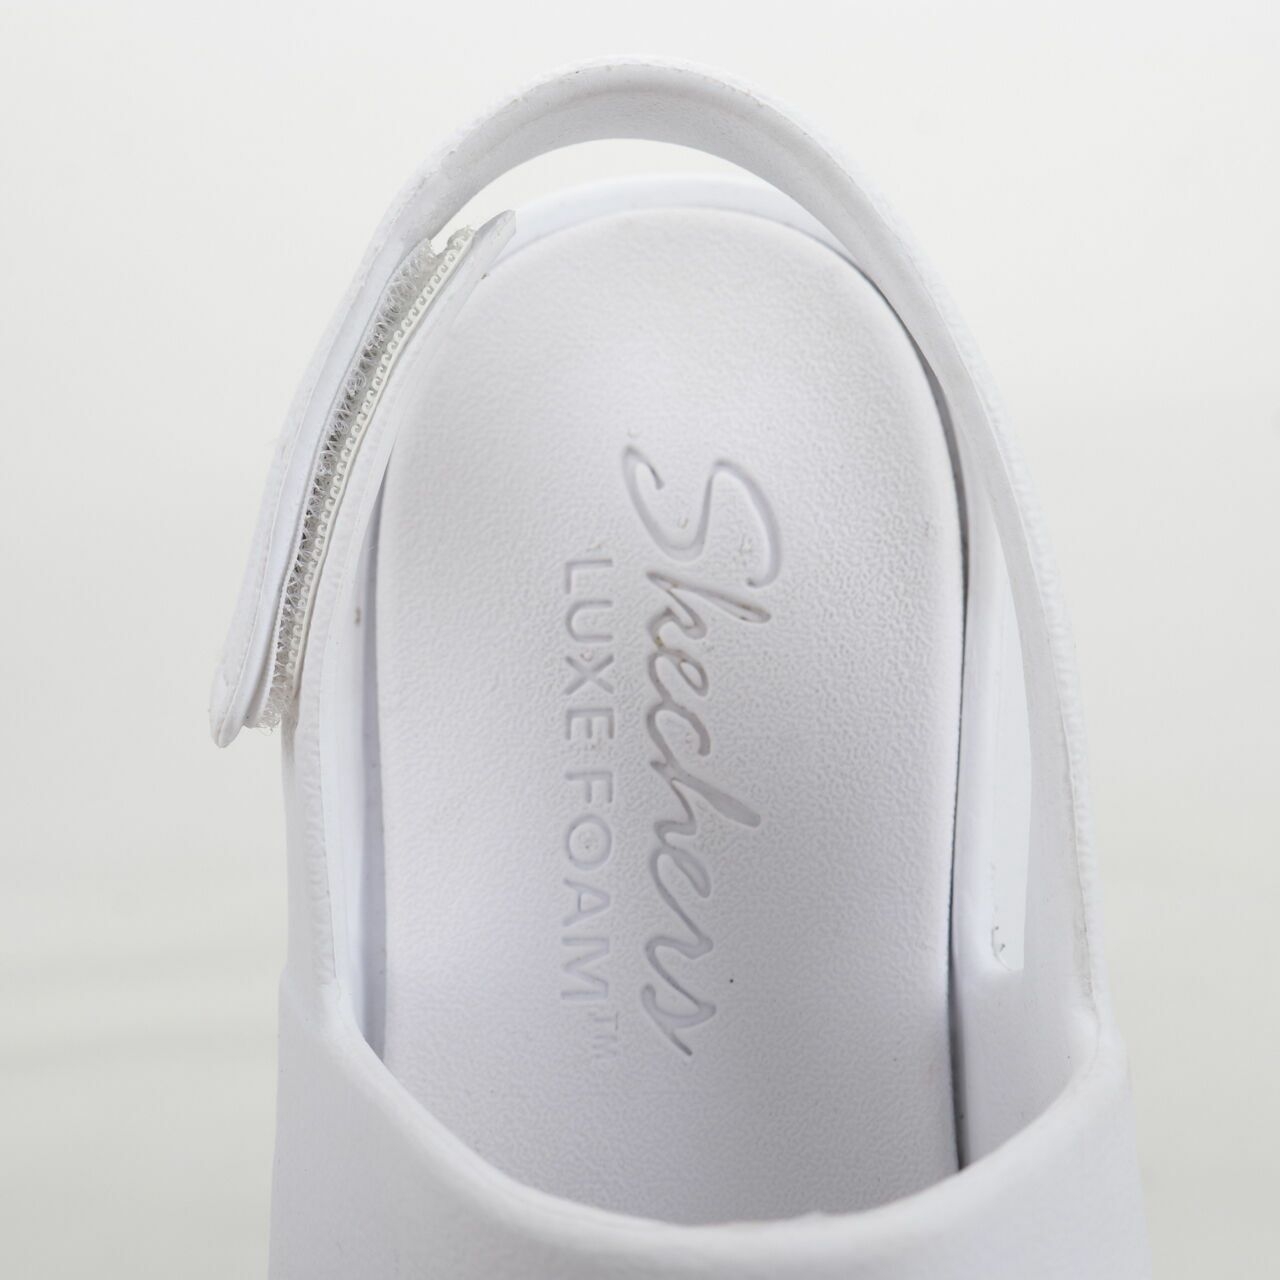 Skechers White Sandals